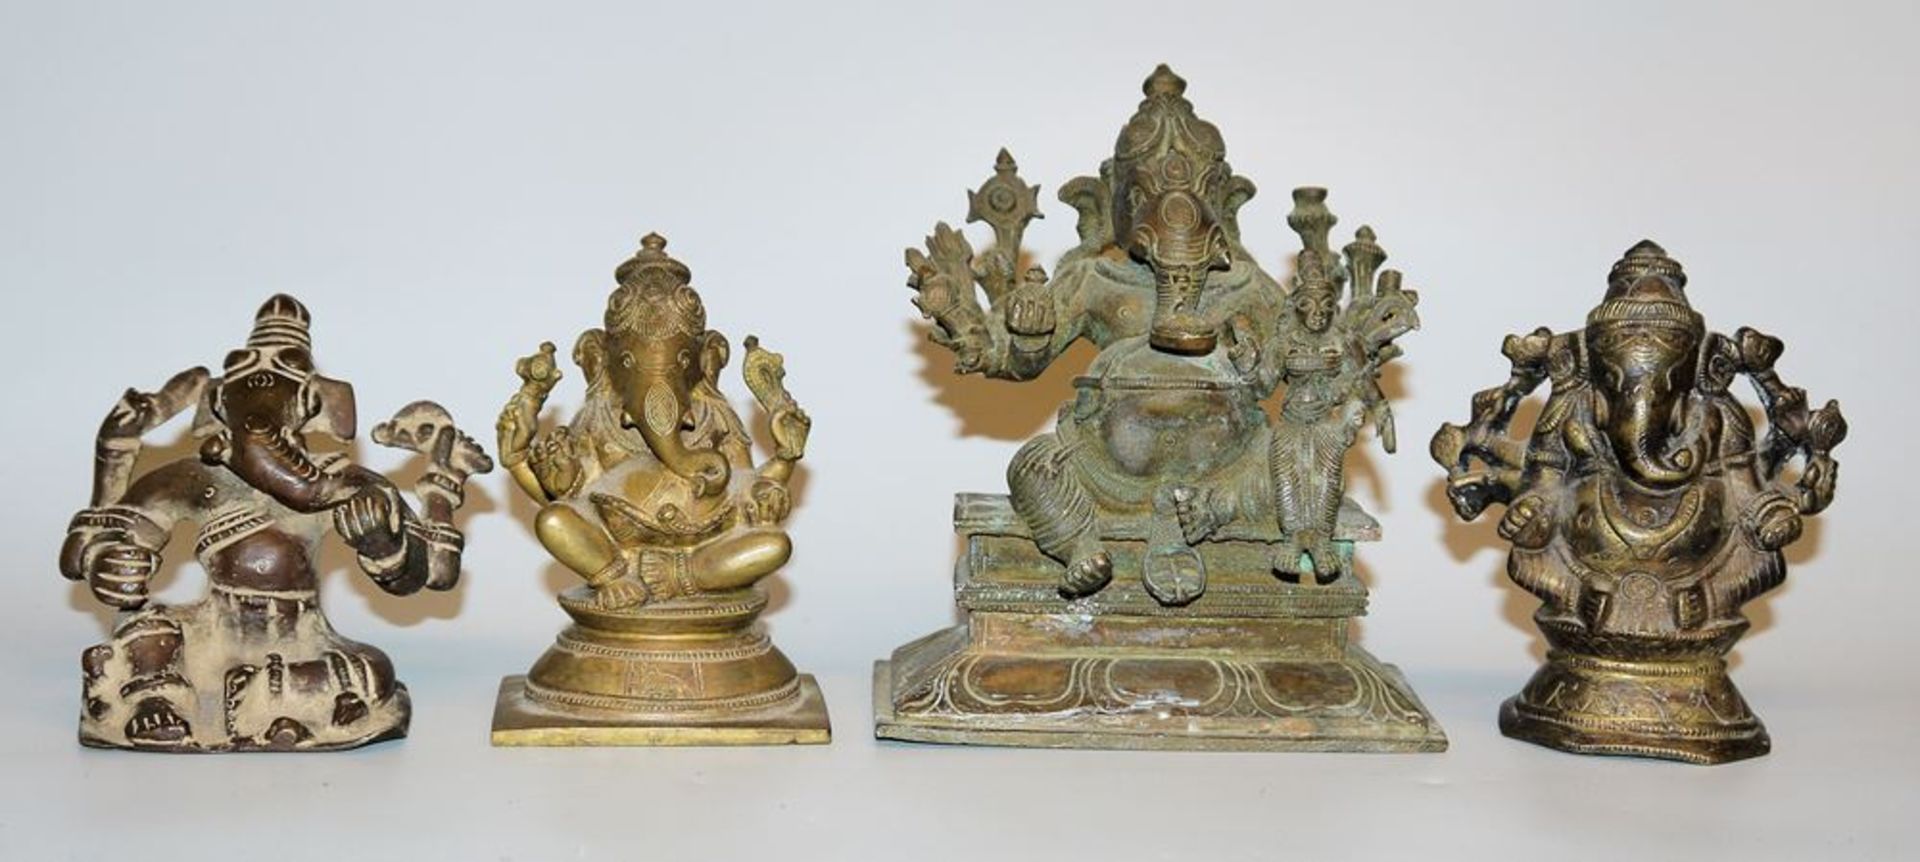 Four bronze sculptures of the elephant god Ganesha, 19th & 20th c.